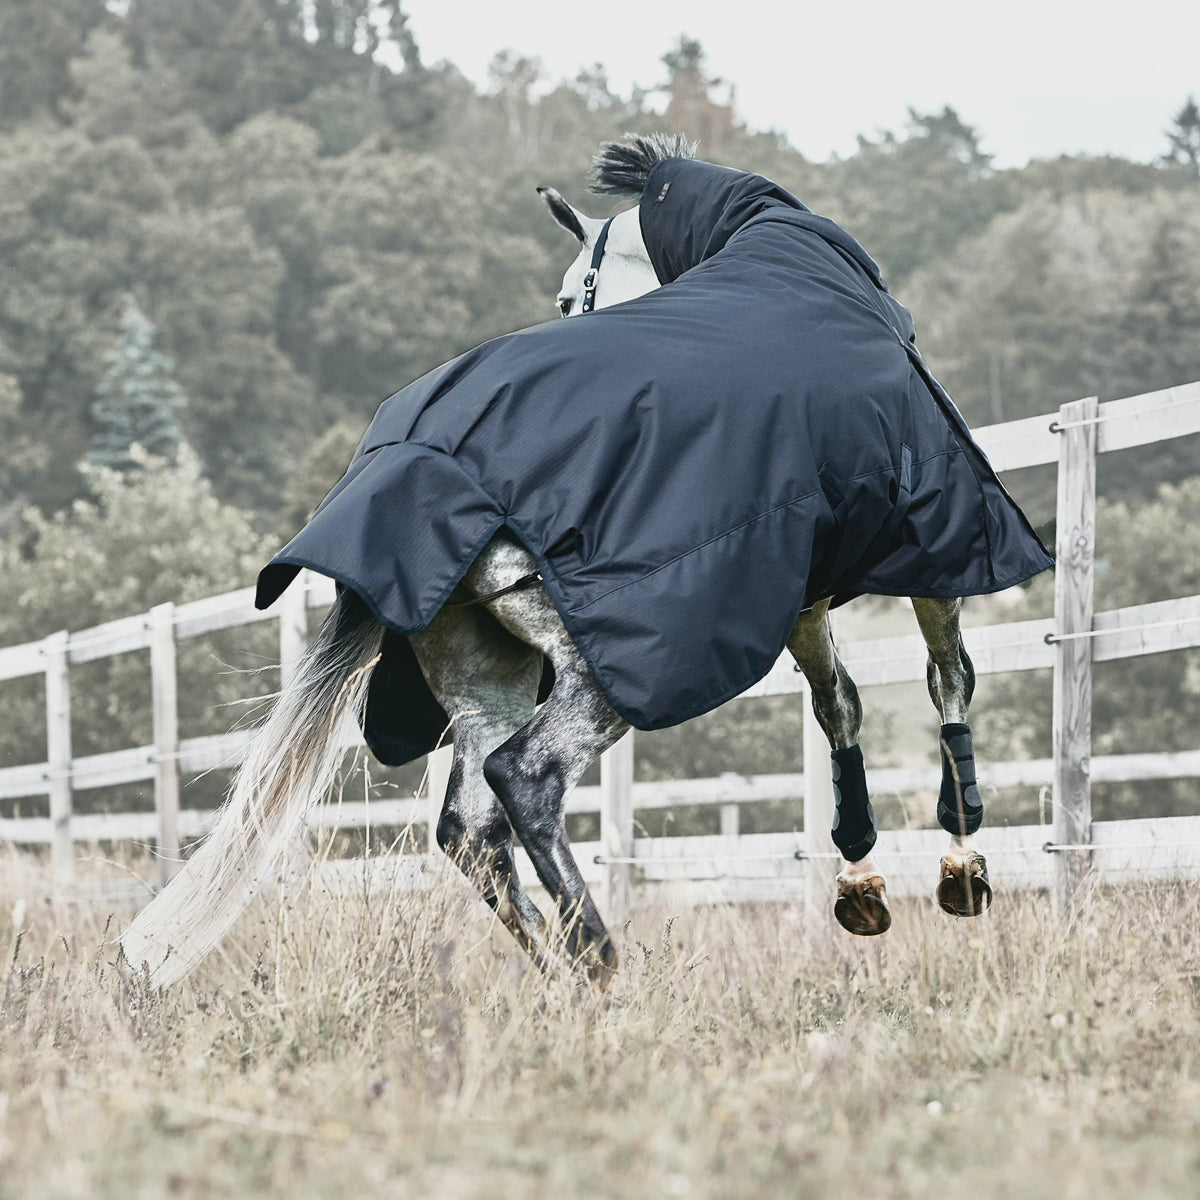 Kingsland equestrian horse rugs